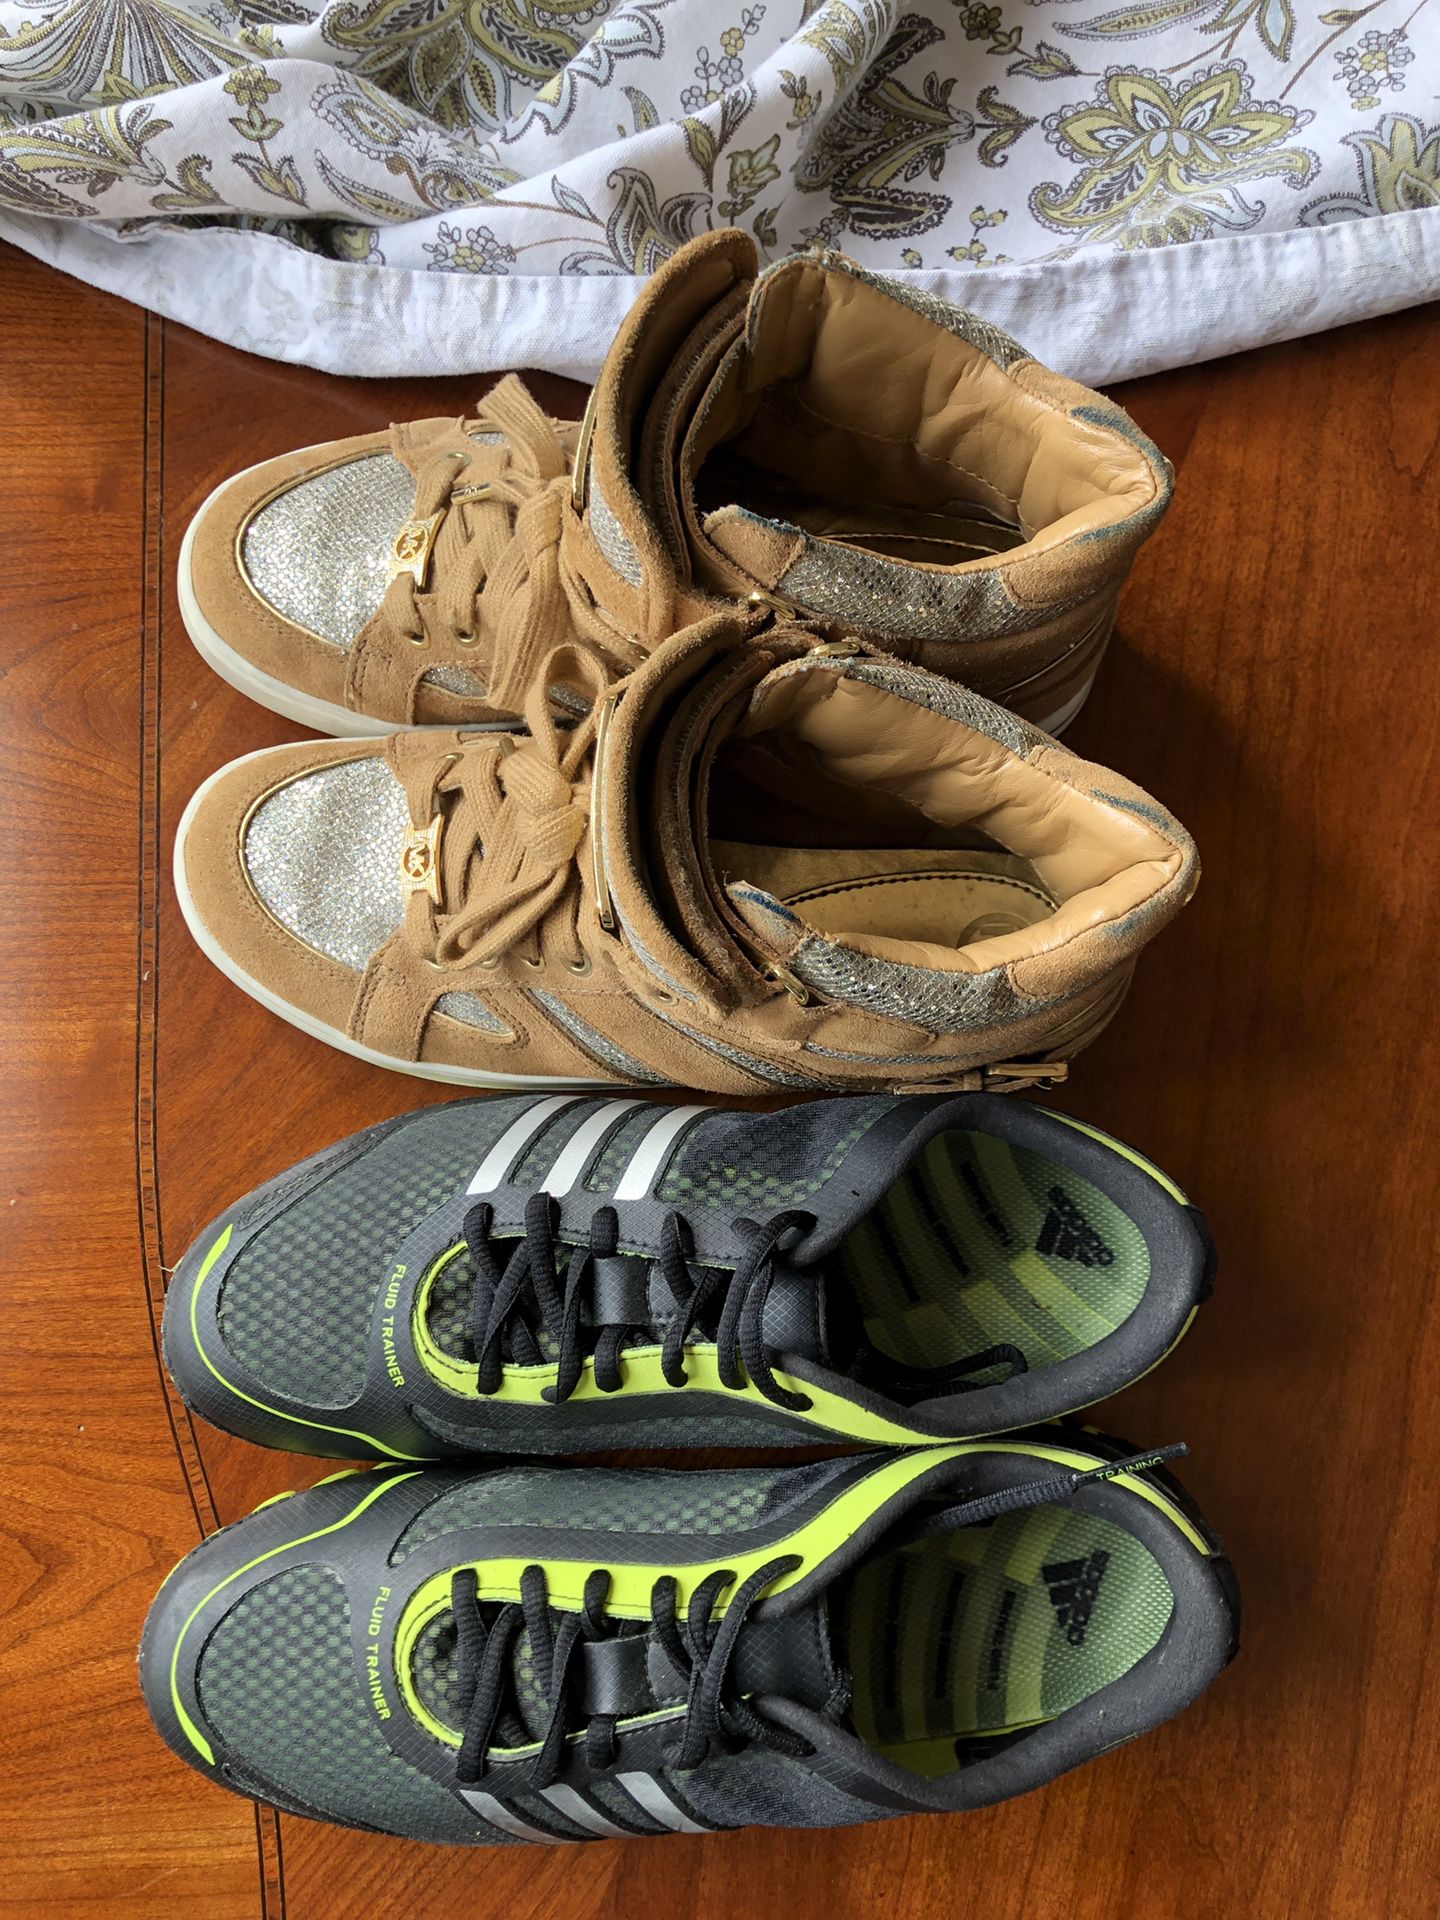 Michael Kors & Adidas shoes